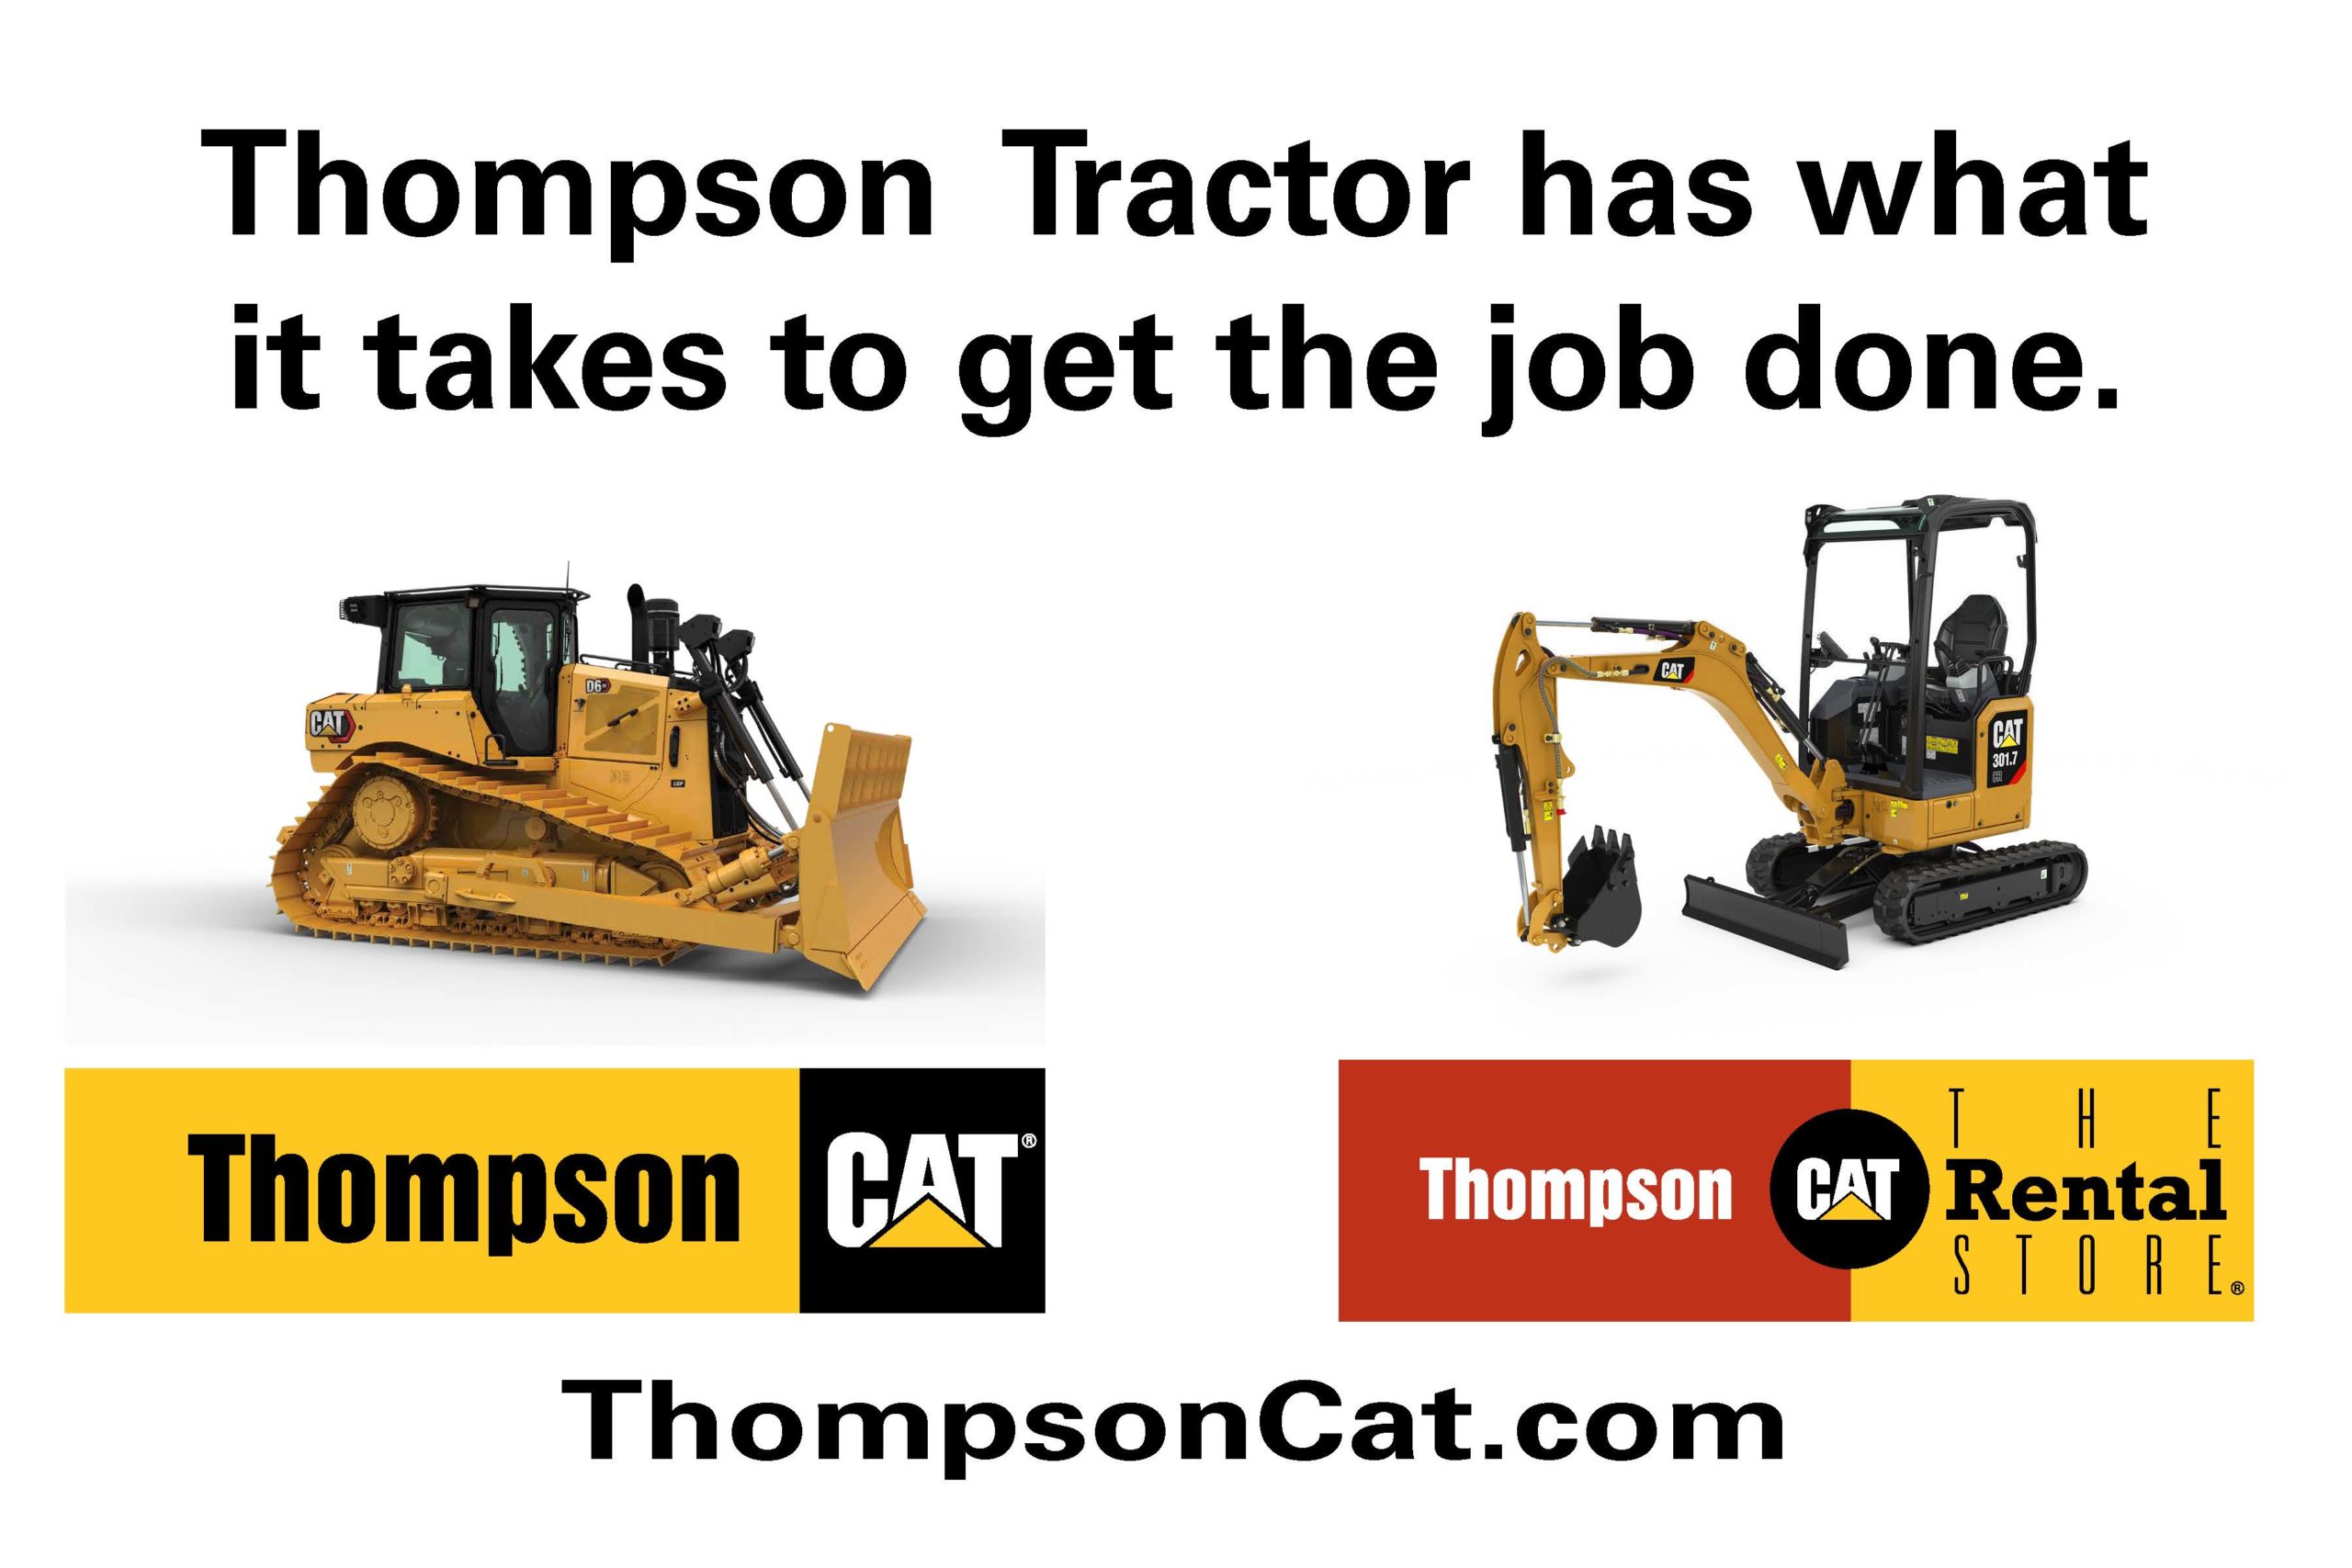 Thompson Tractor